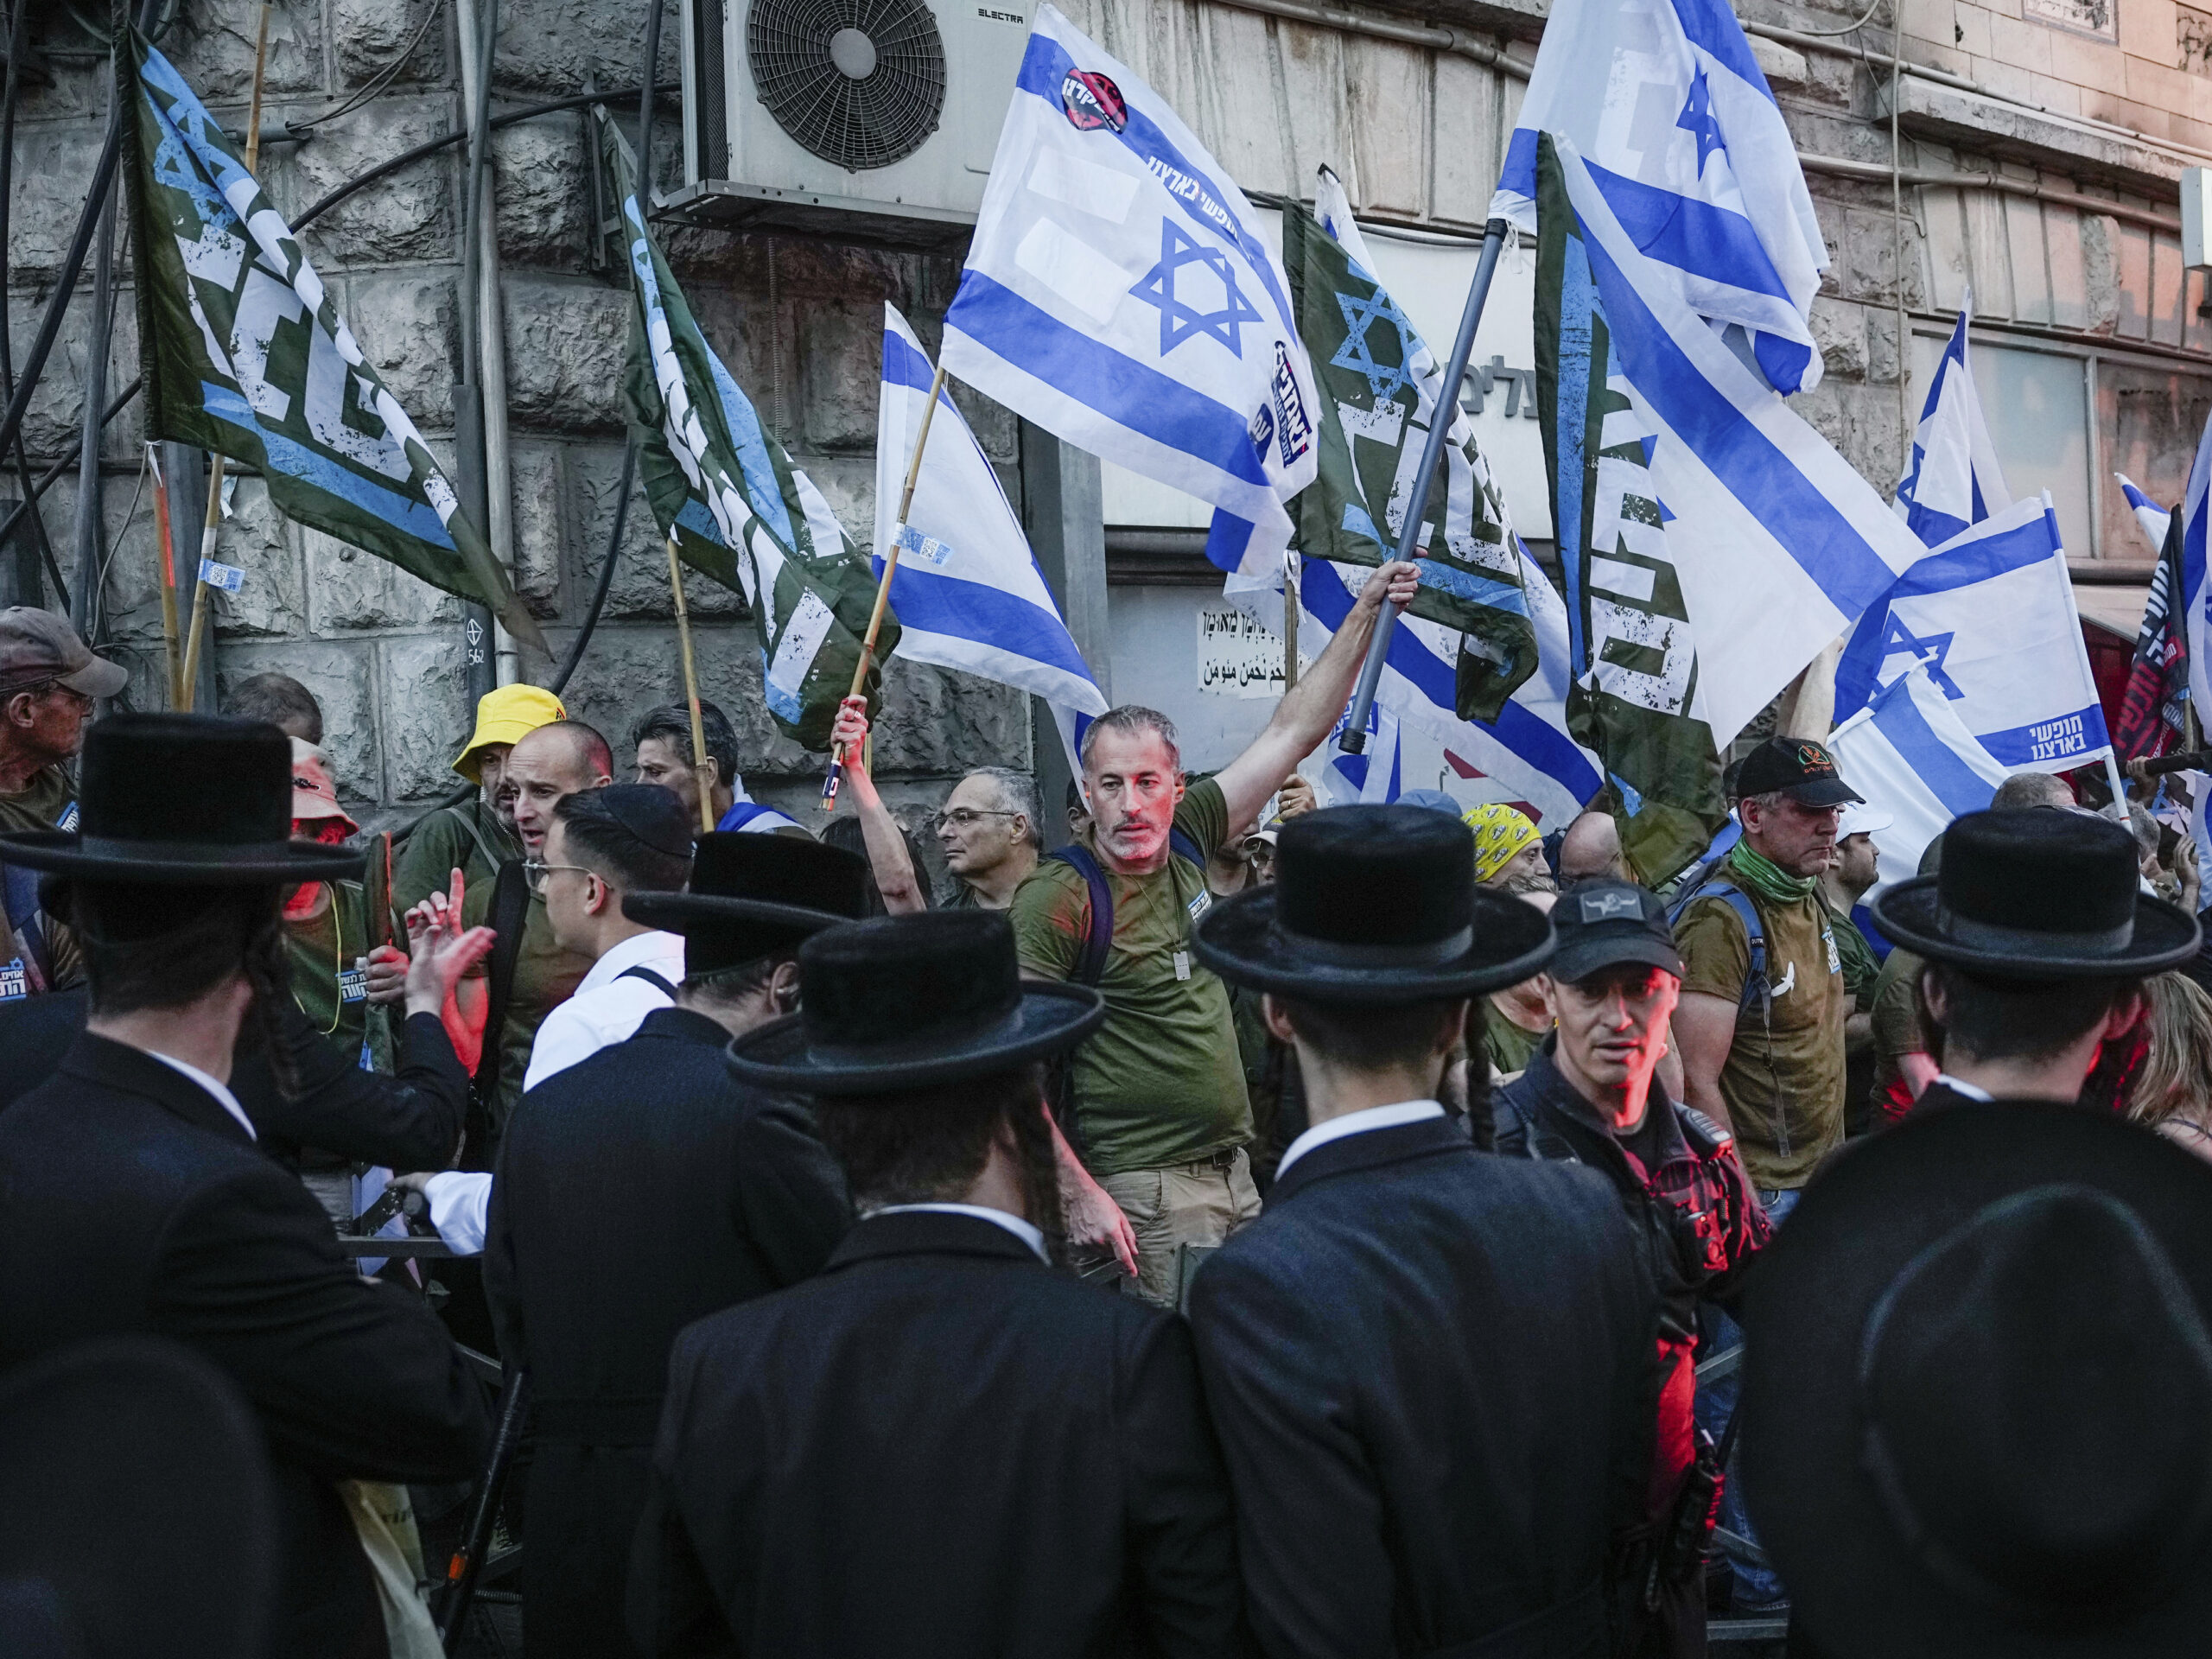 Israelis stage largest protest since war began to increase pressure on Netanyahu